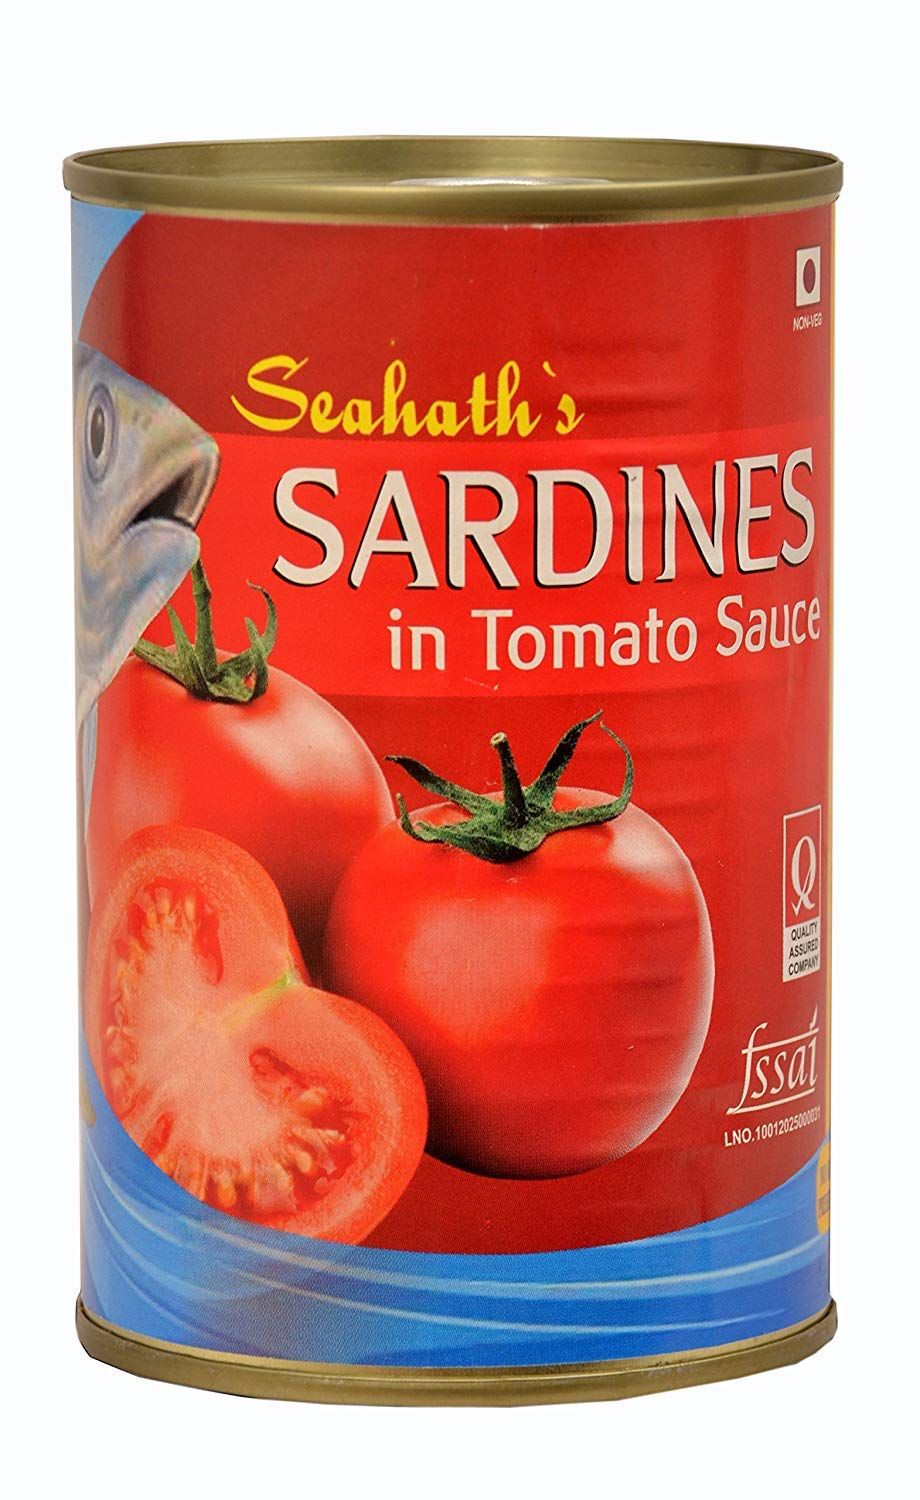 Ocean's Secret Seahath's Sarrdines in Tomato Sauce Image